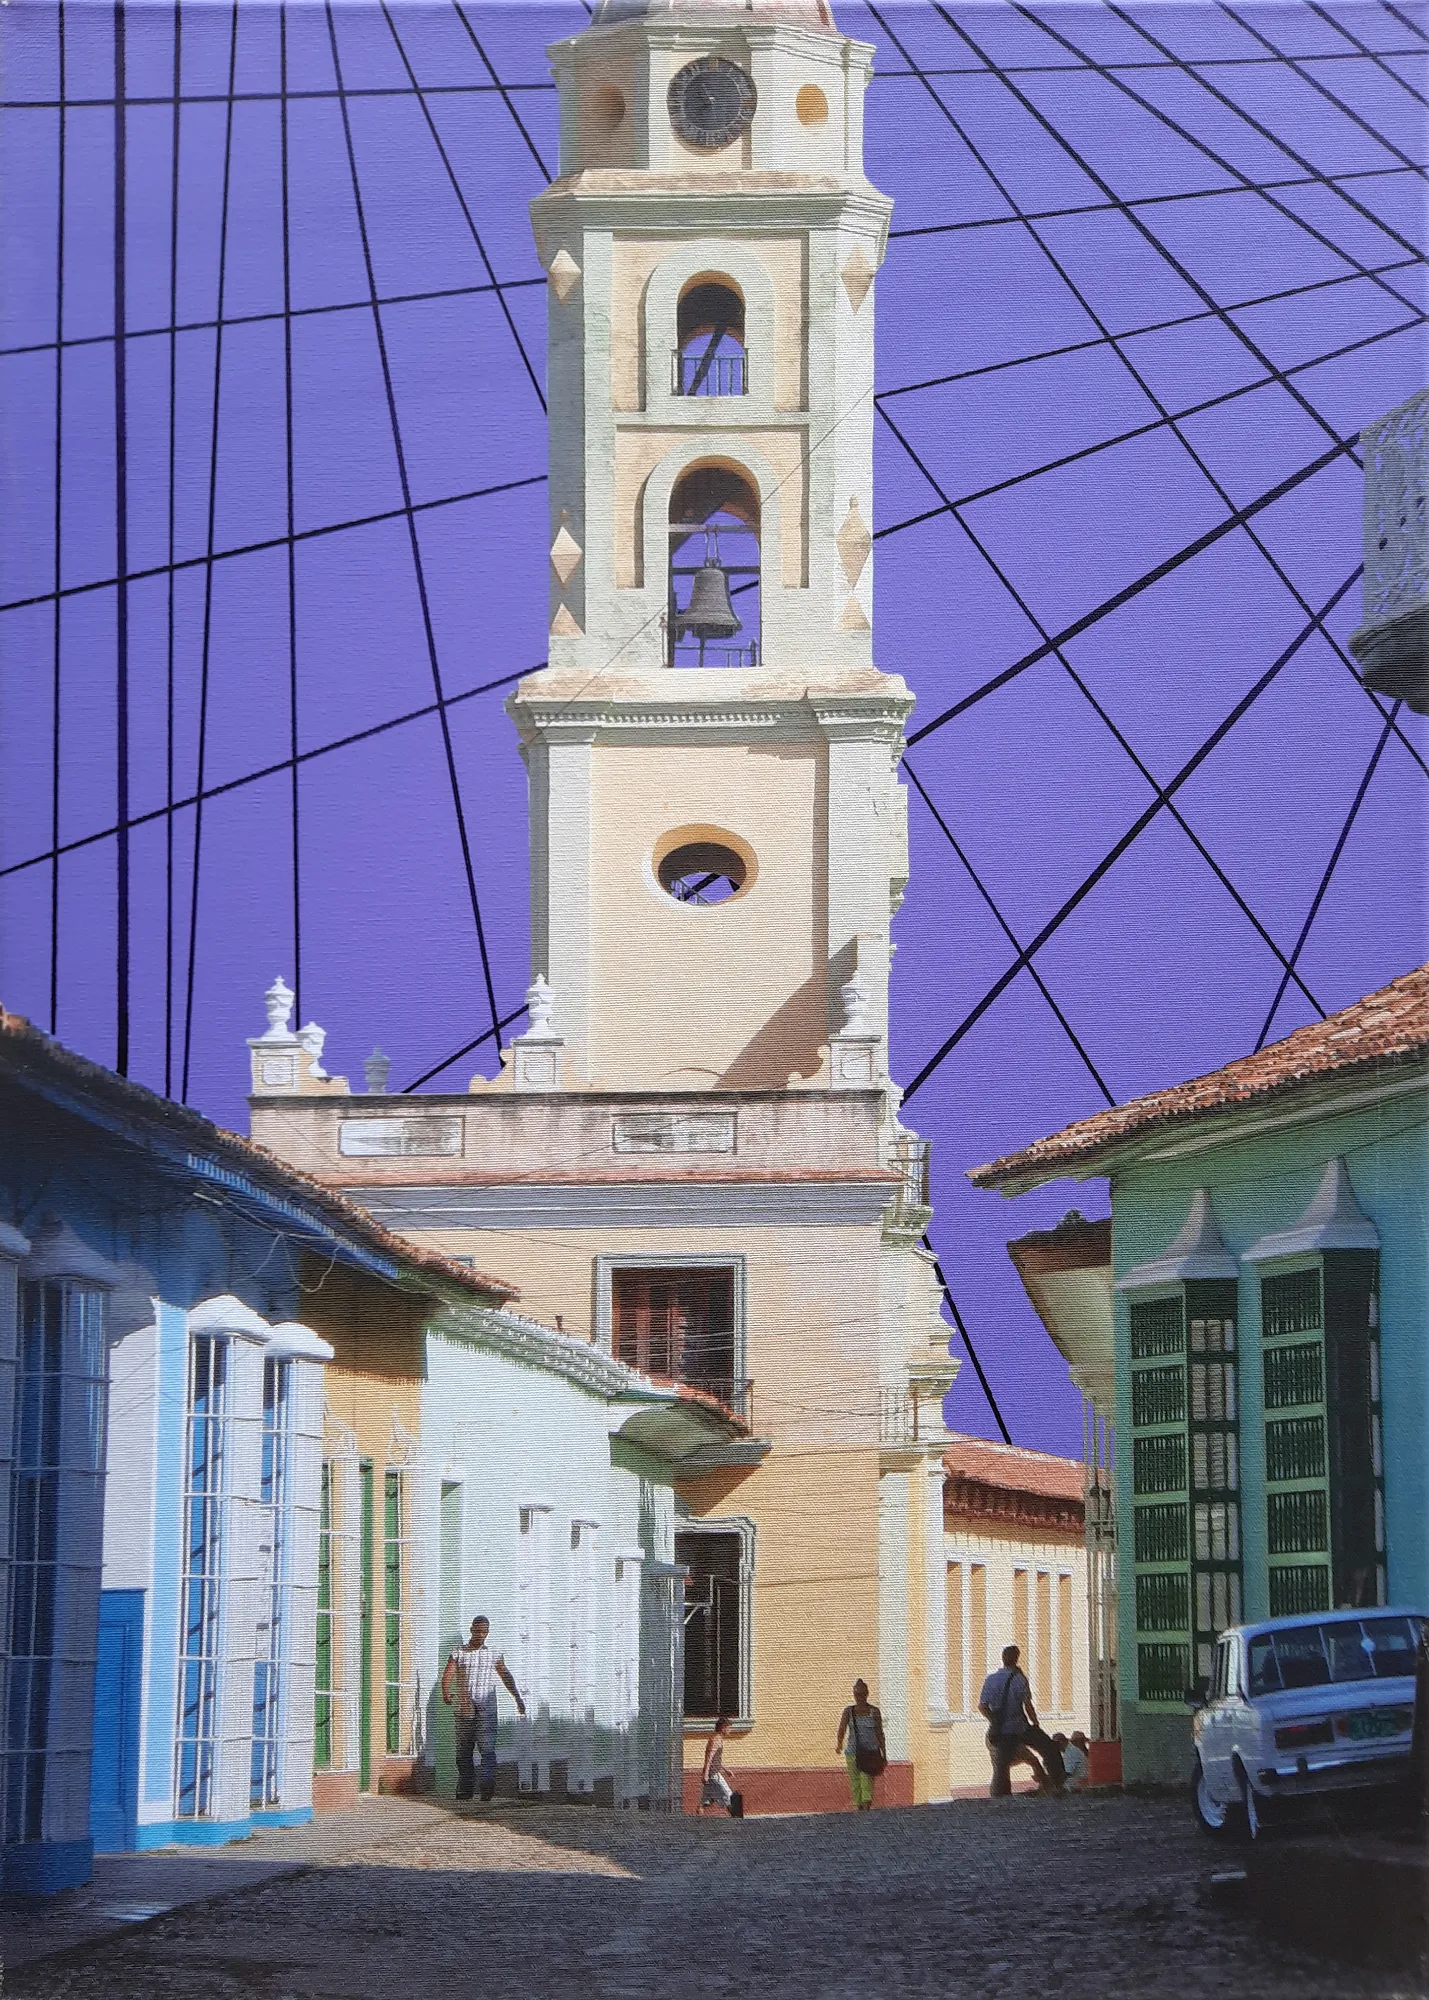 Featured image for “Saint Francis of Assini Cuba”